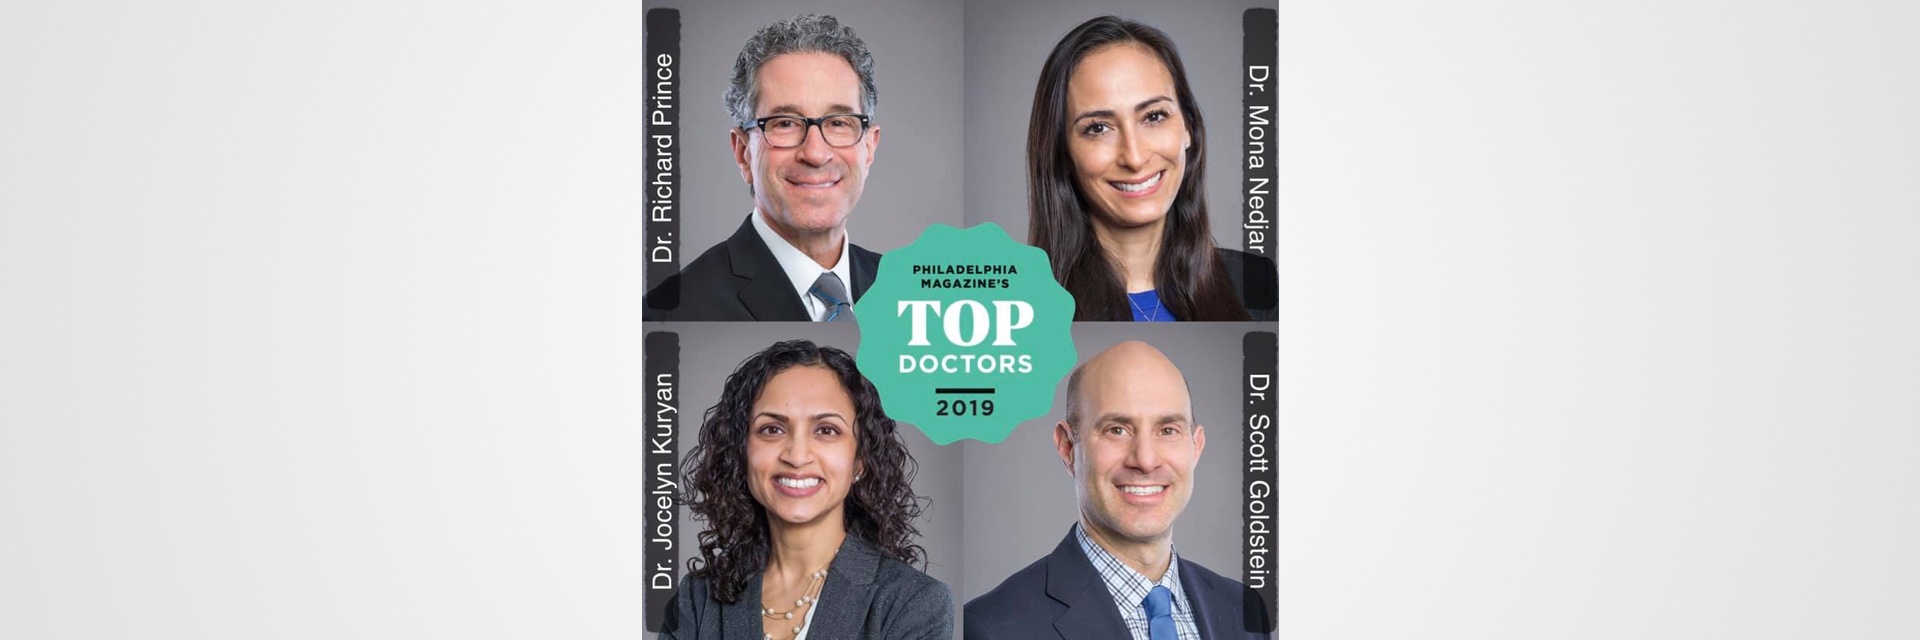 Philadelphia Magazine’s Top Doctors™ 2019 in Ophthalmology Image 1